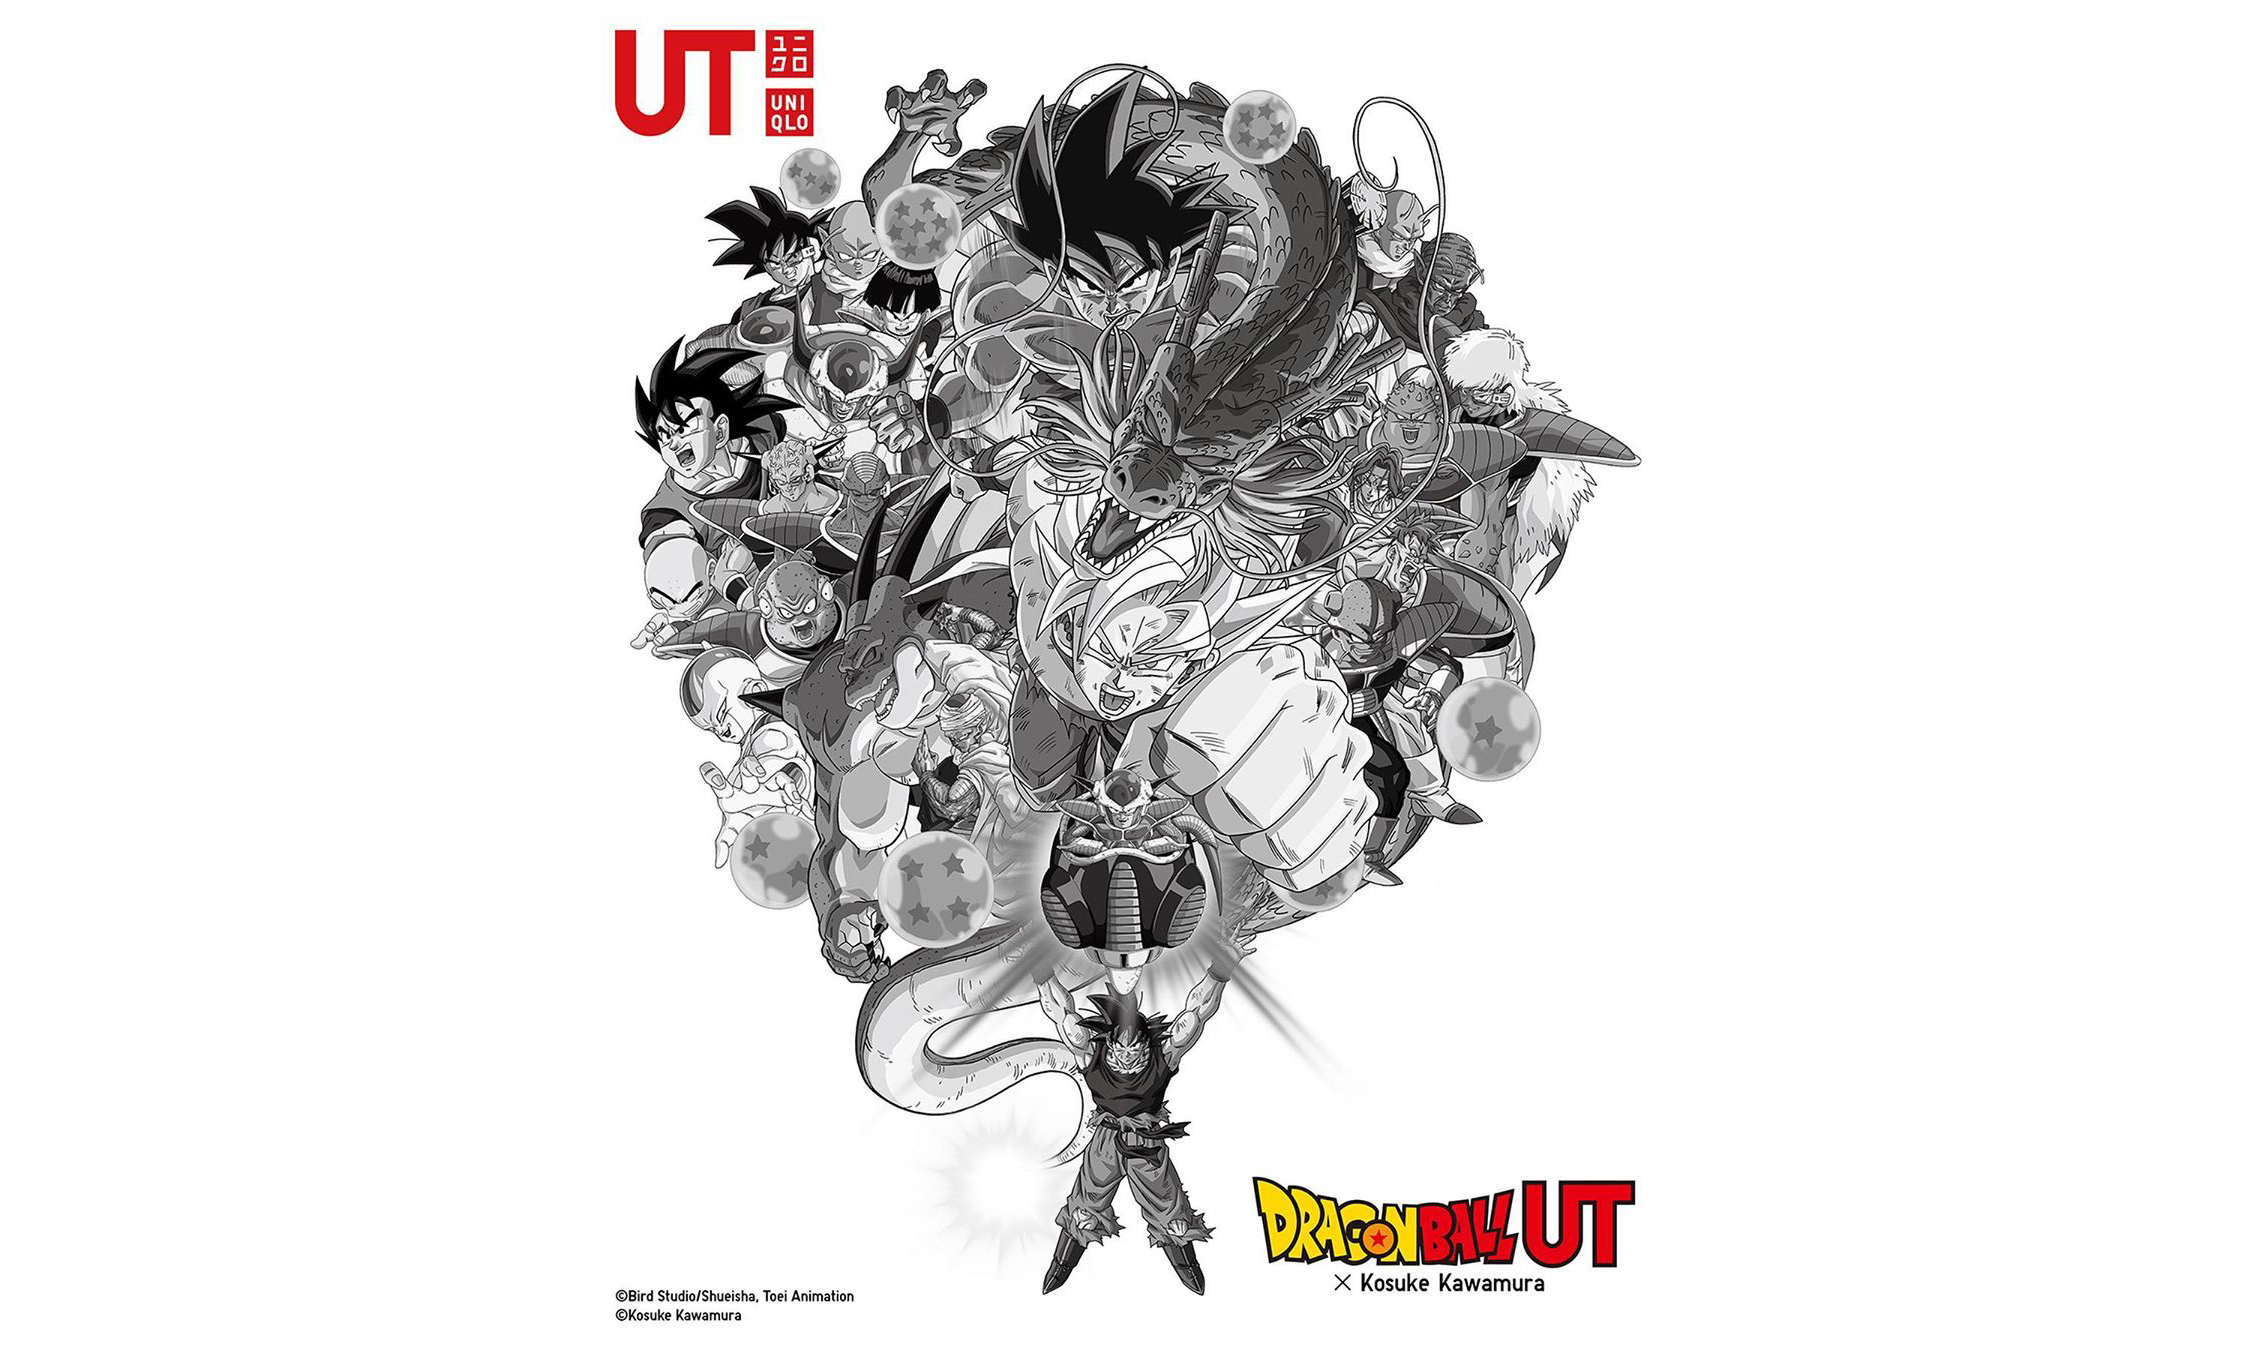 UNIQLO UT ×《Dragon Ball》× Kosuke Kawamura 联名系列将于 11 月登场